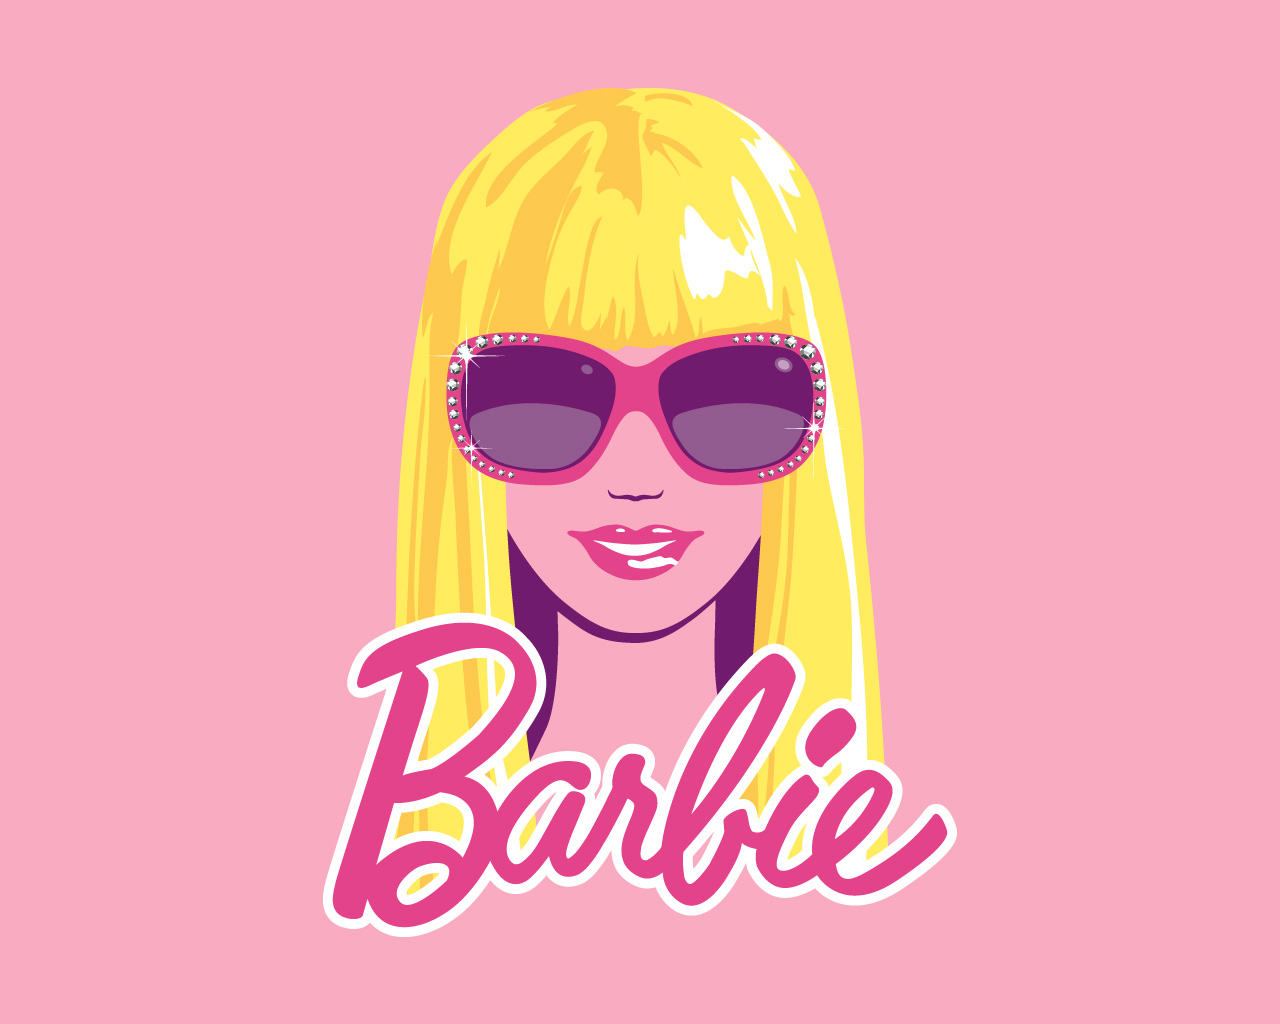 Barbie Image Wallpaper Photos